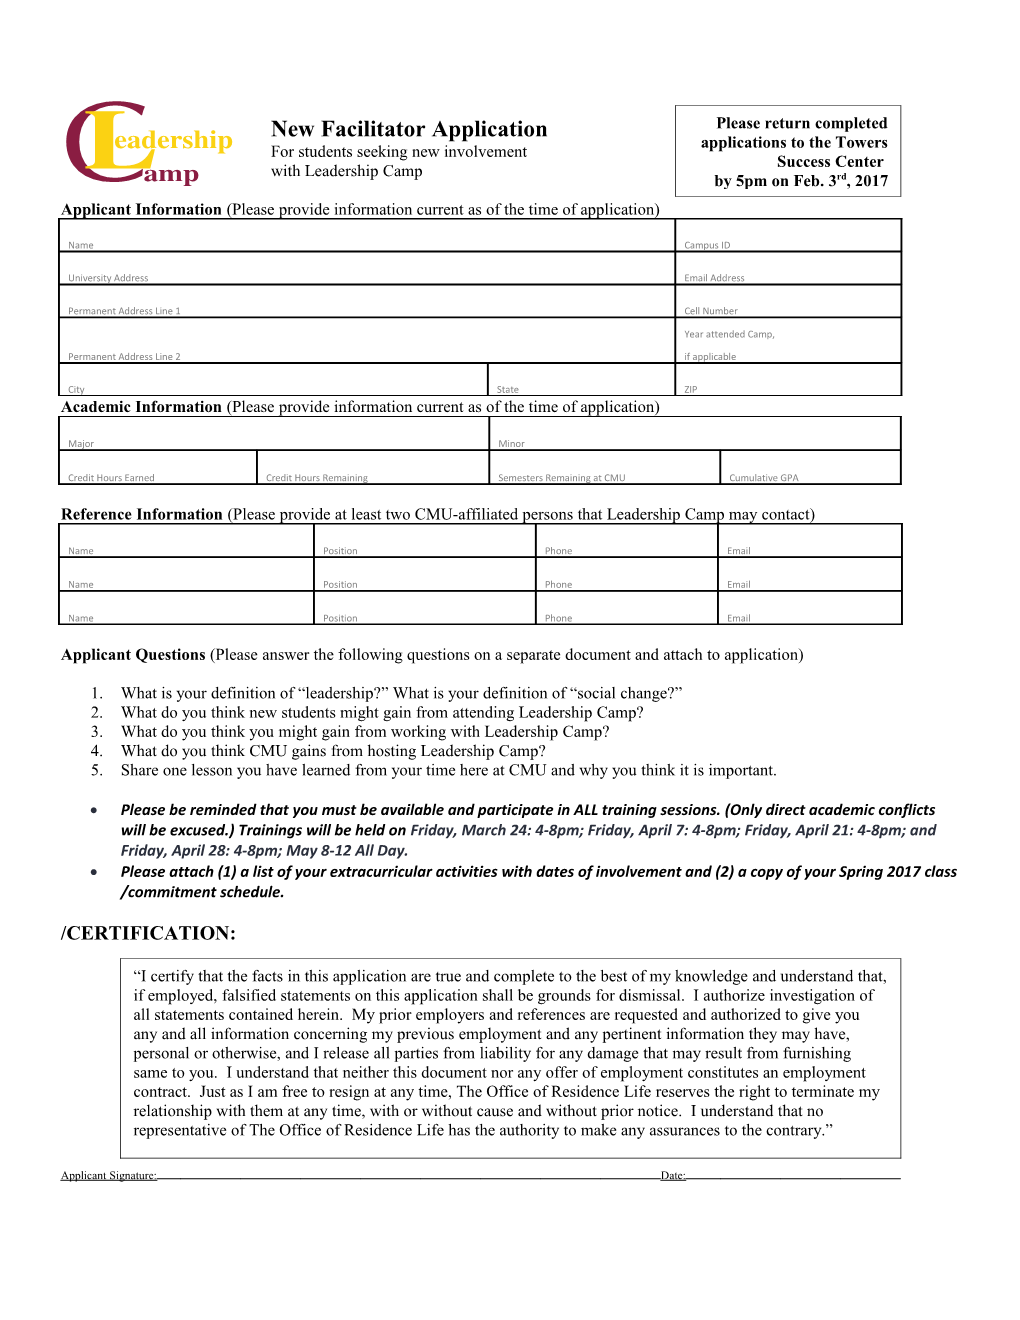 Leadership Camp Facilitator Application and Background Sheet